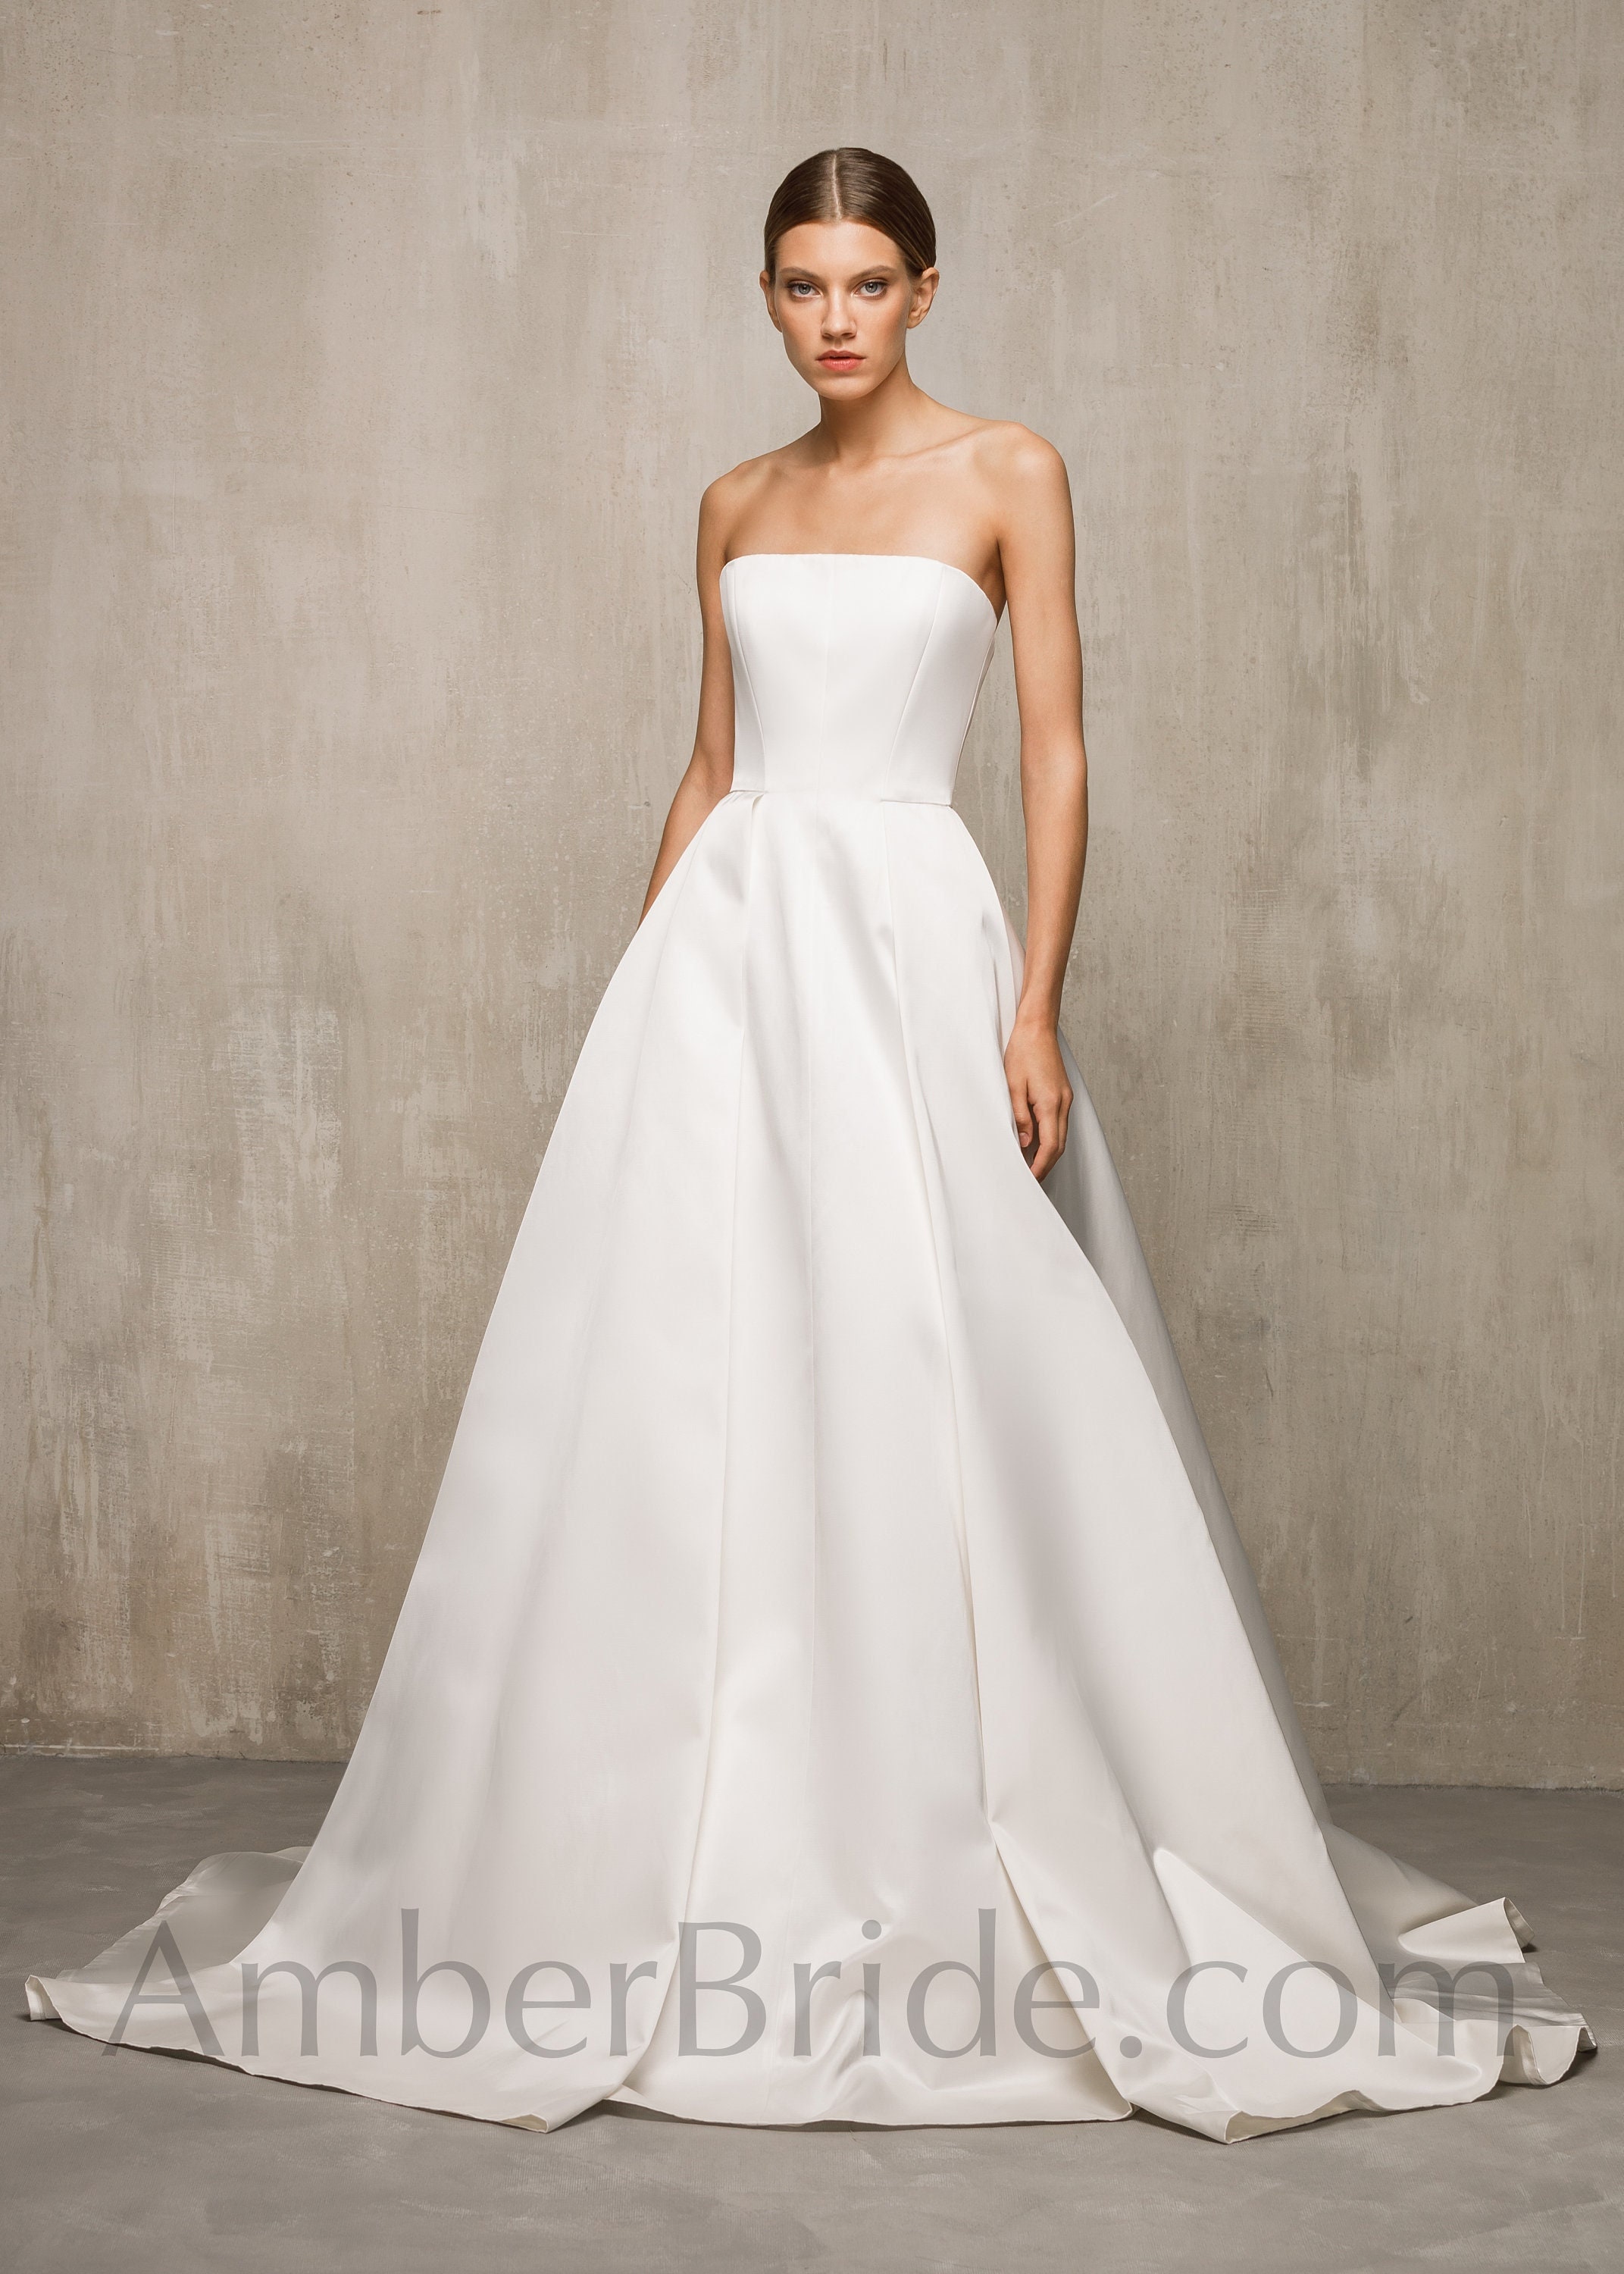 Modest Wedding Dress White Ball Gown, Satin Strapless Wedding Gown